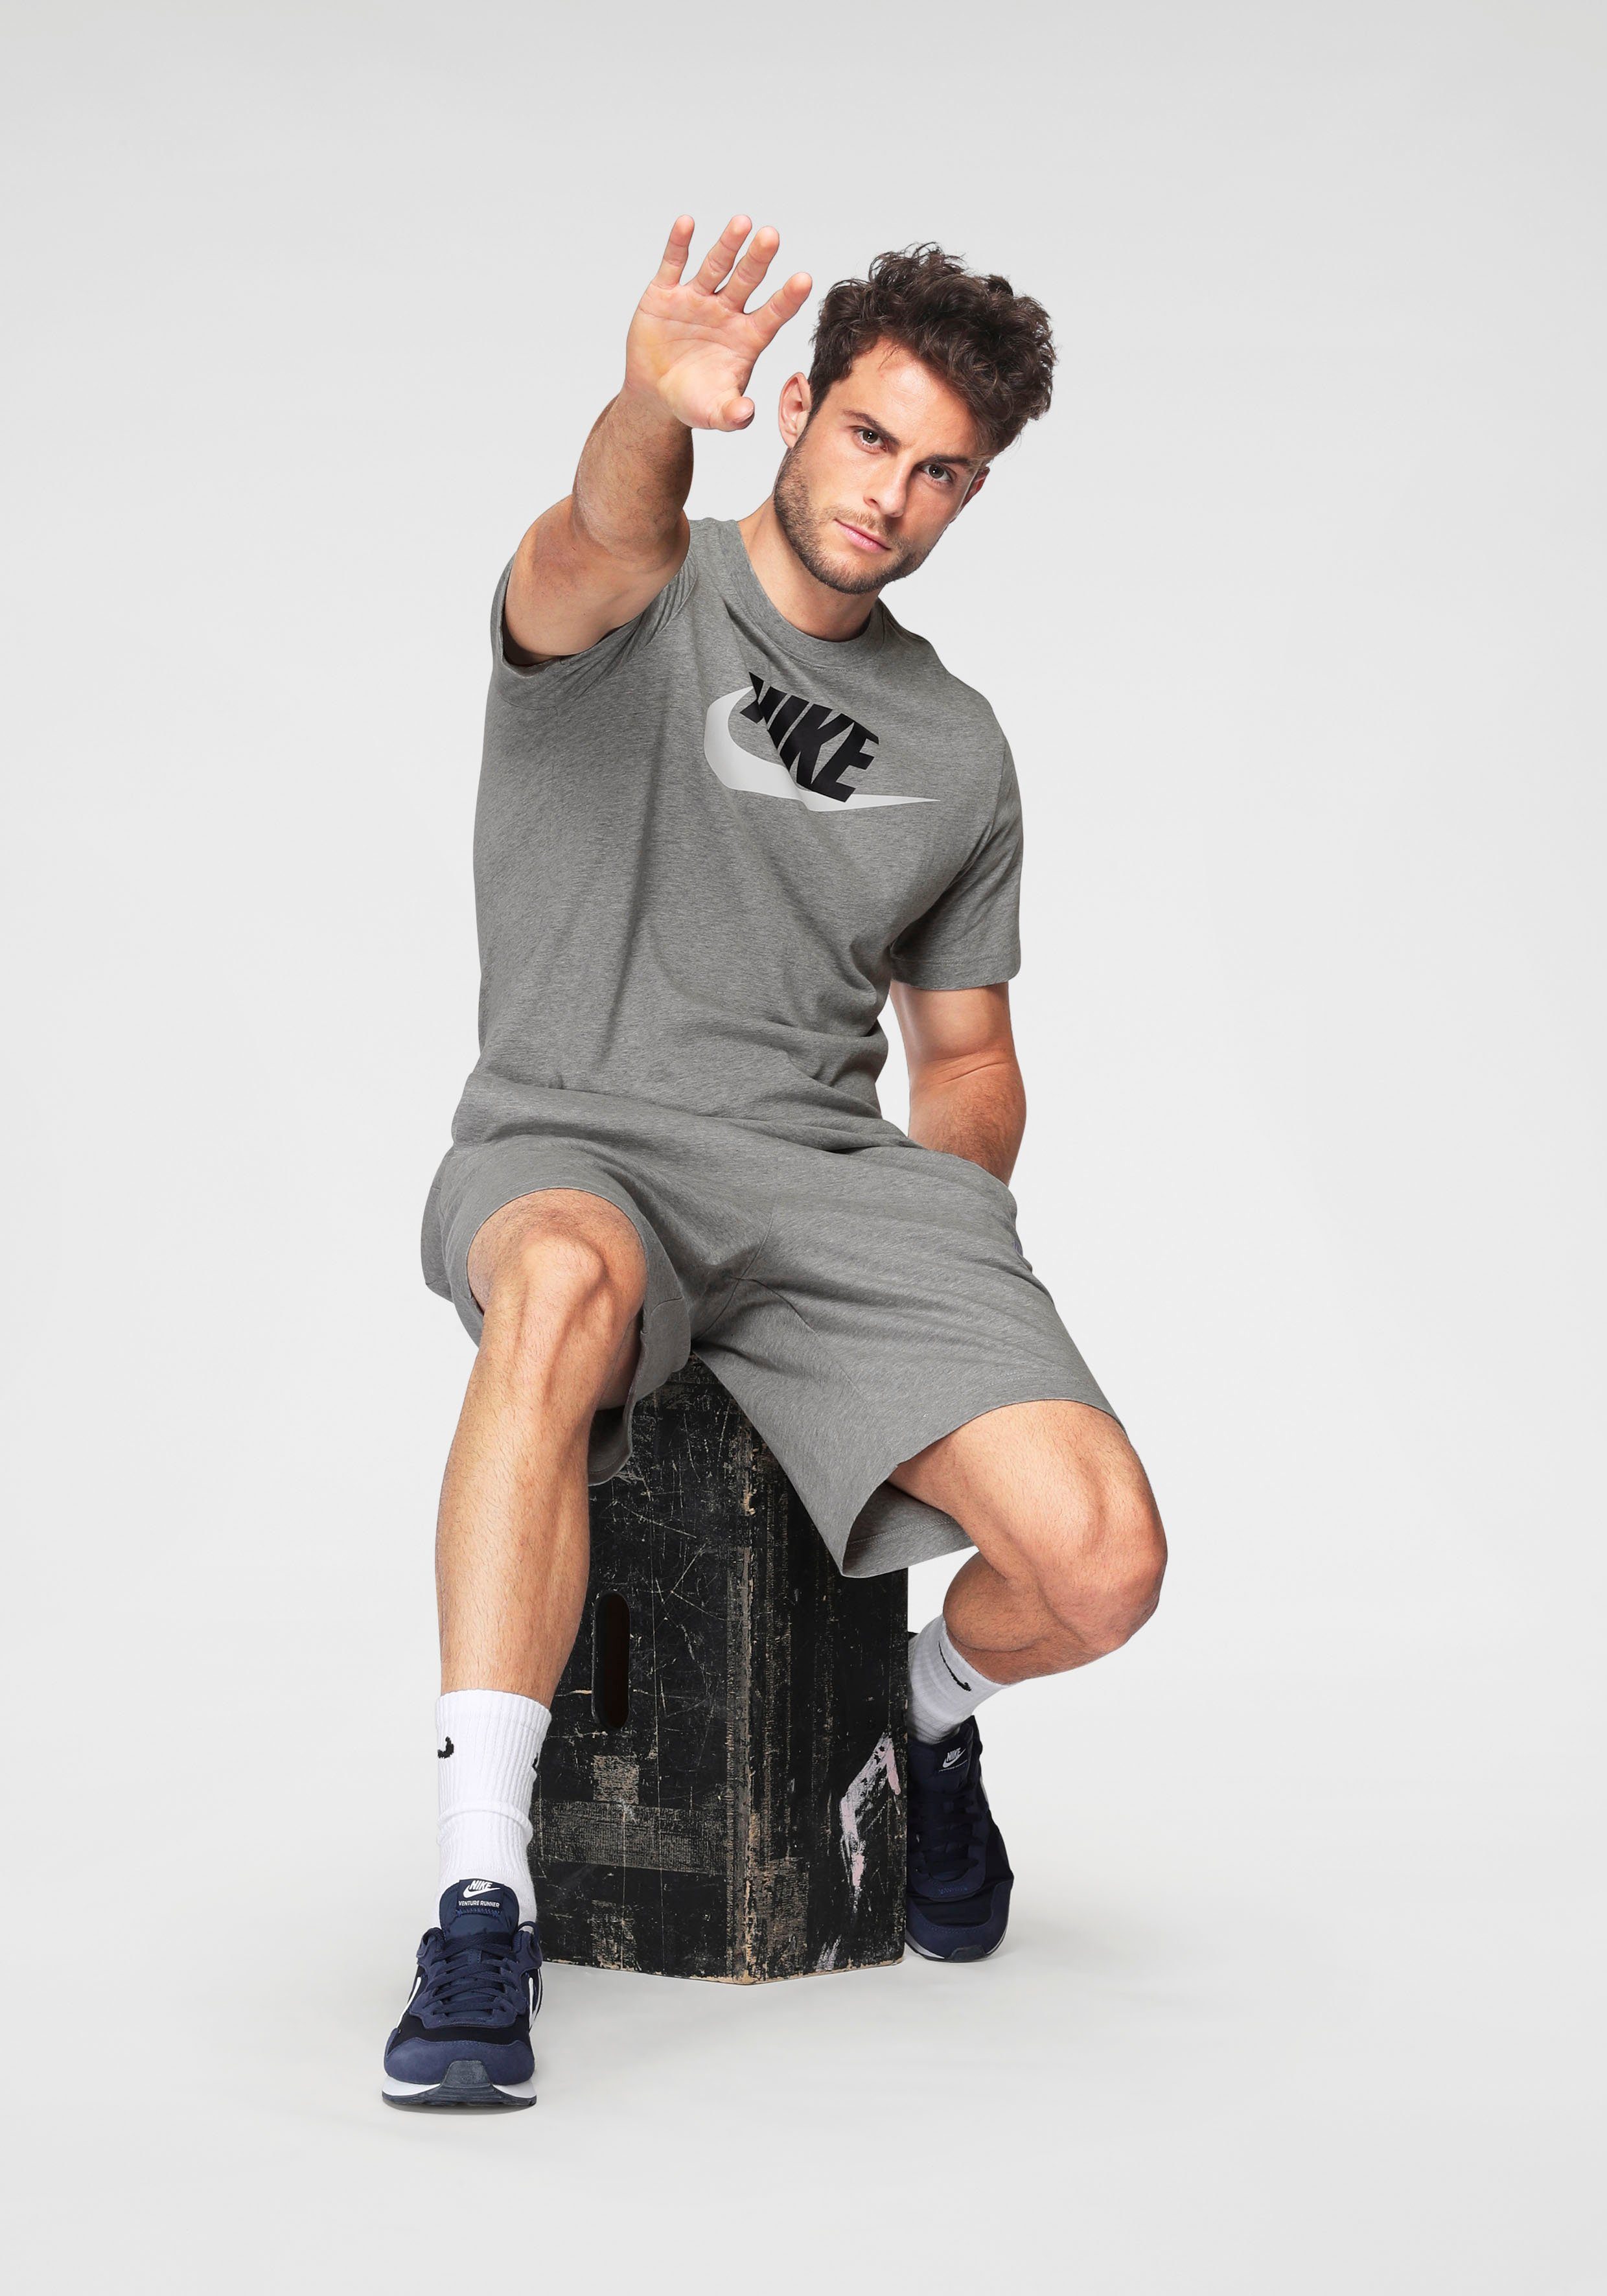 Men's Club Sportswear Shorts hellgrau-meliert Nike Shorts